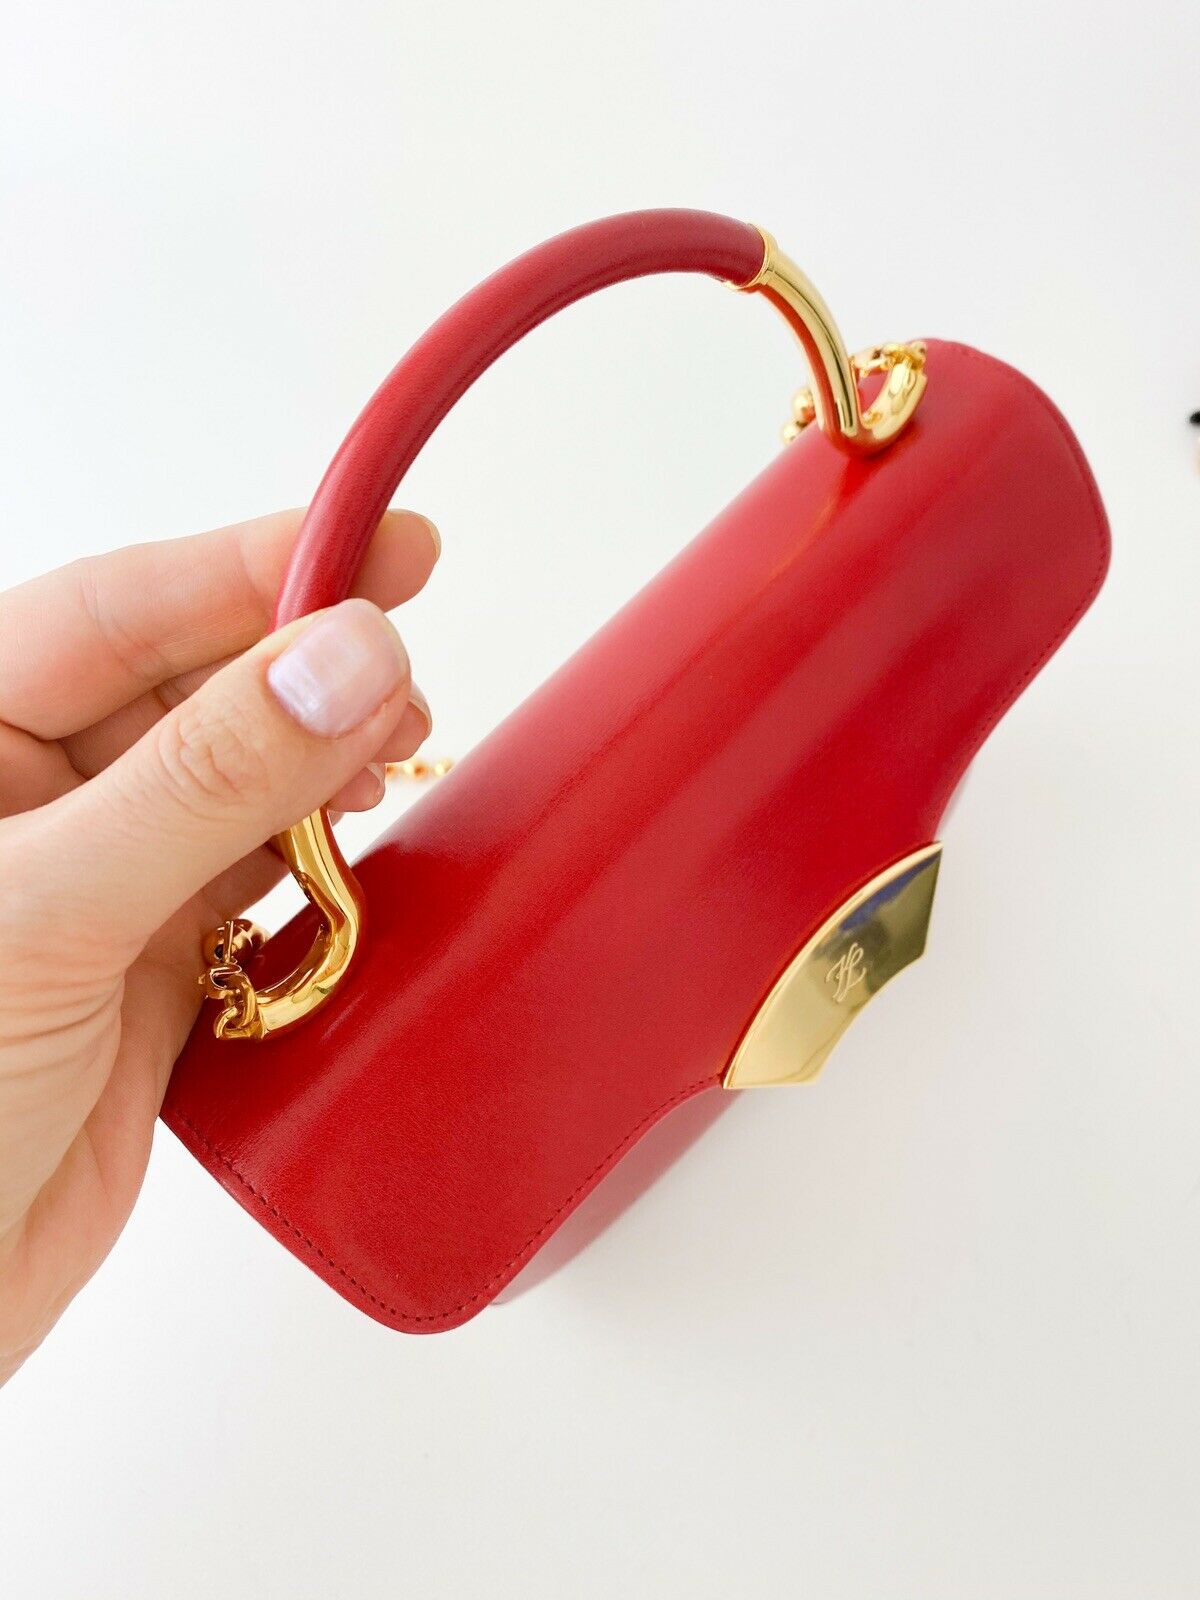 【SOLD OUT】Karl Lagerfeld Red Leather 3Ways Handbag Shoulder Cross Body Made in France Vintage